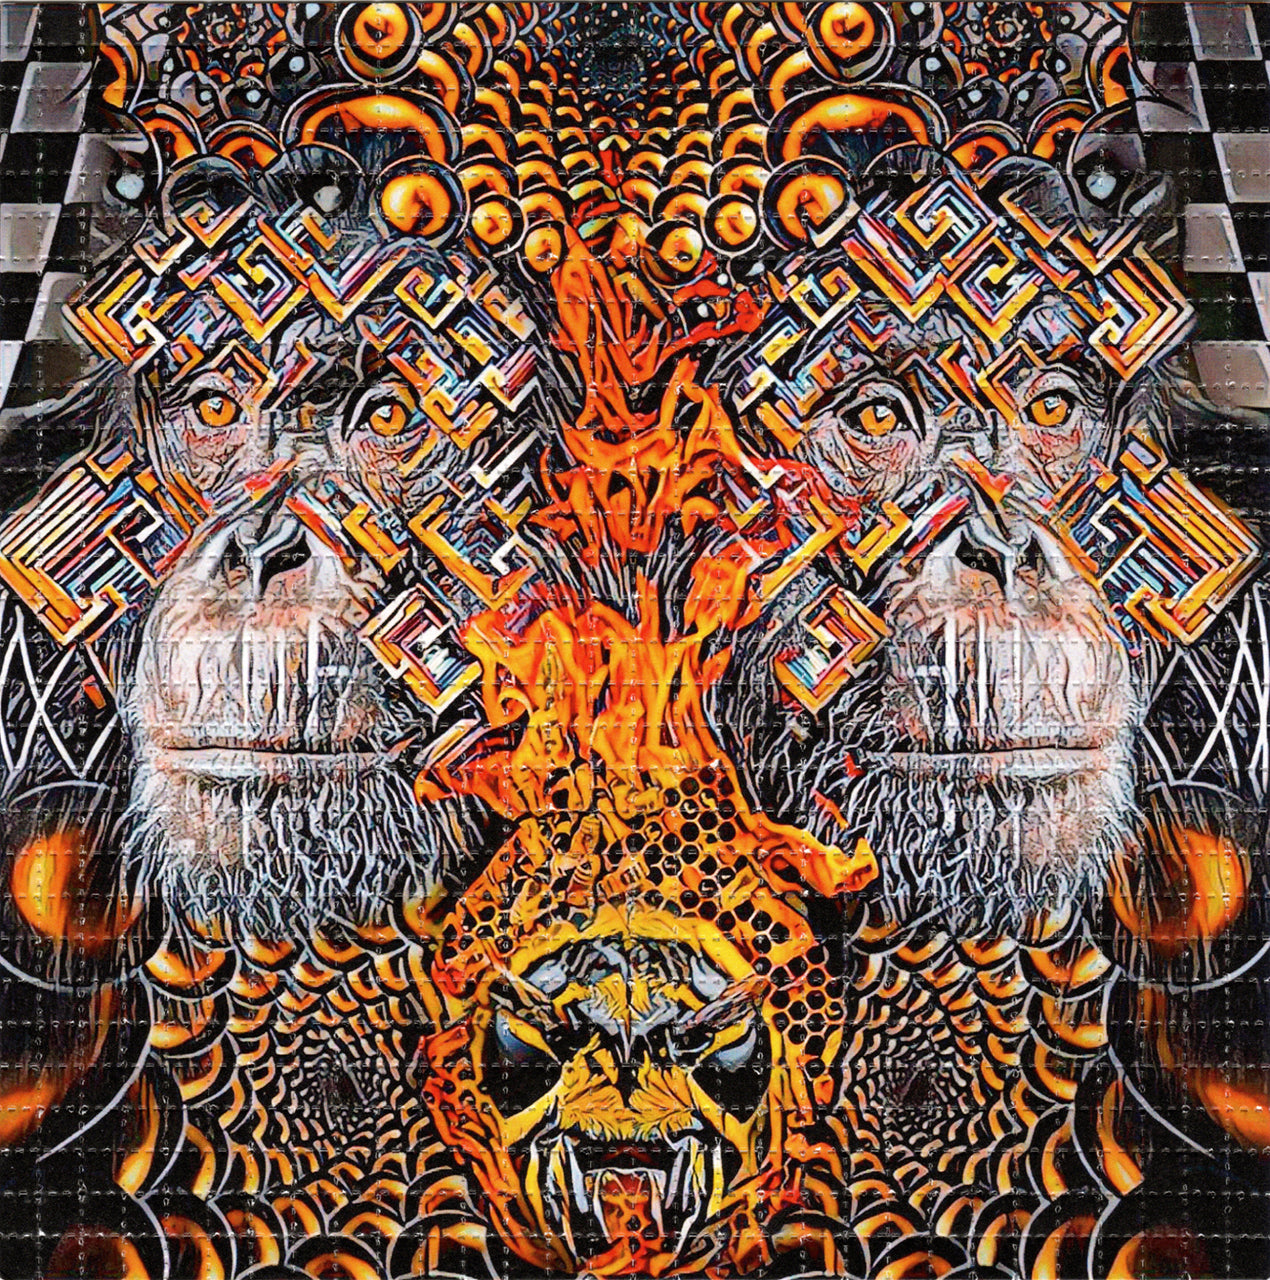 Hot Chimpanzee by Zack Prestage SIGNED Limited Edition LSD blotter art print